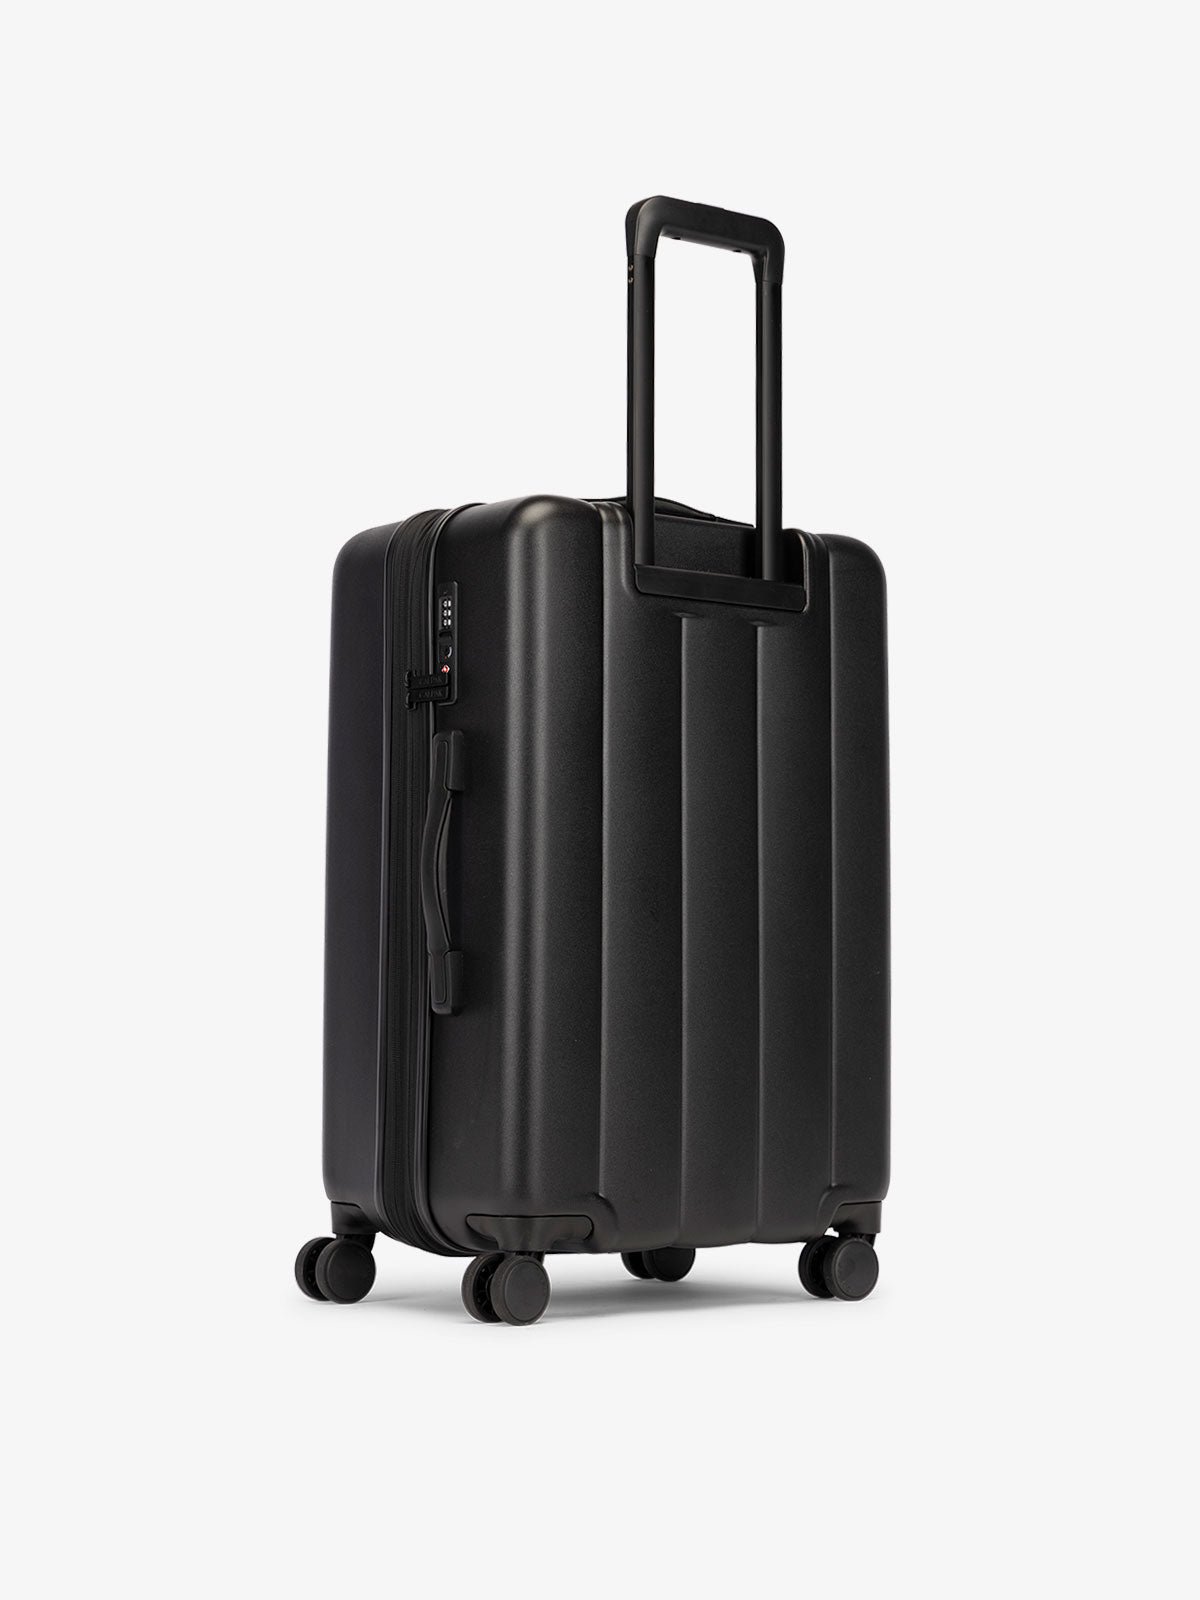 CALPAK medium luggage featuring dual spinner wheels and bottom grab handle in black